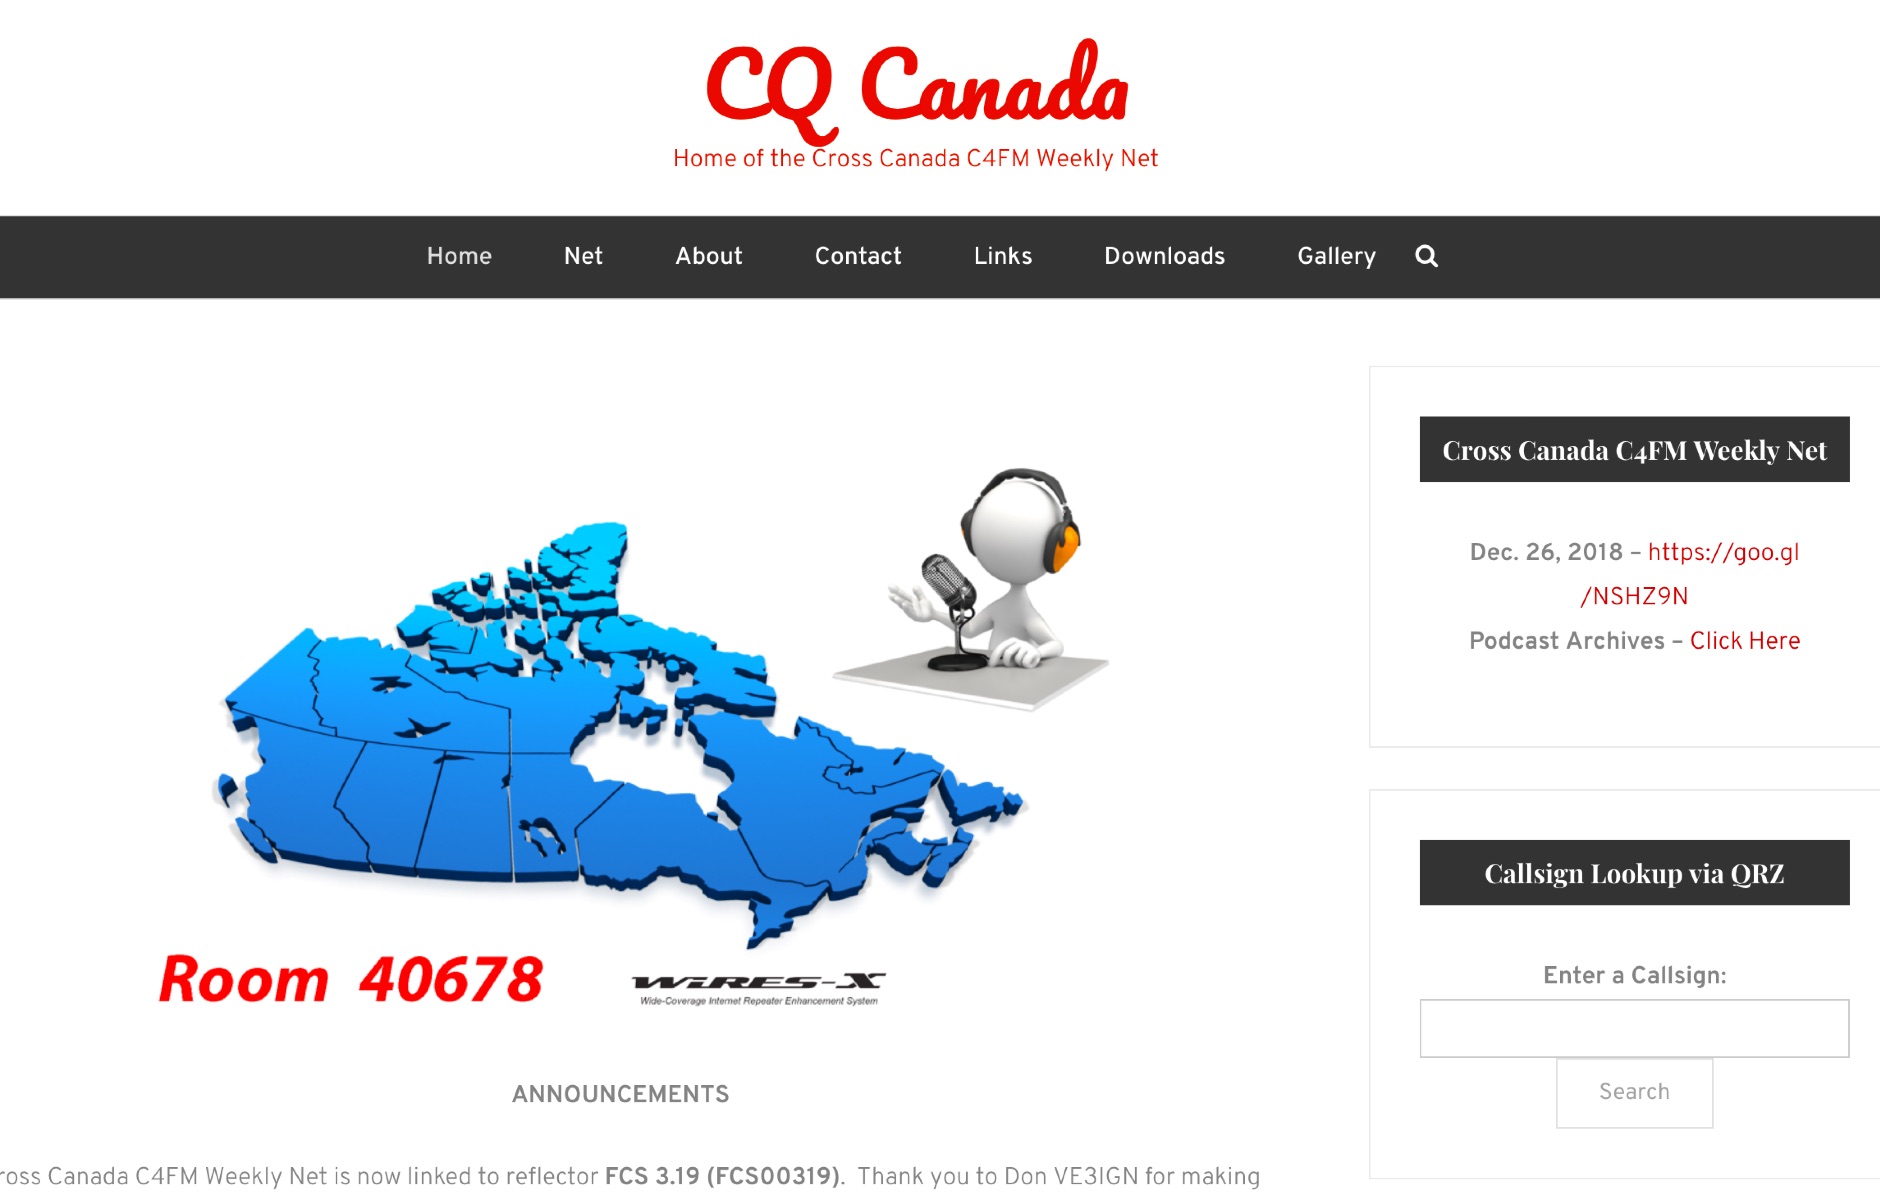 CQ Canada